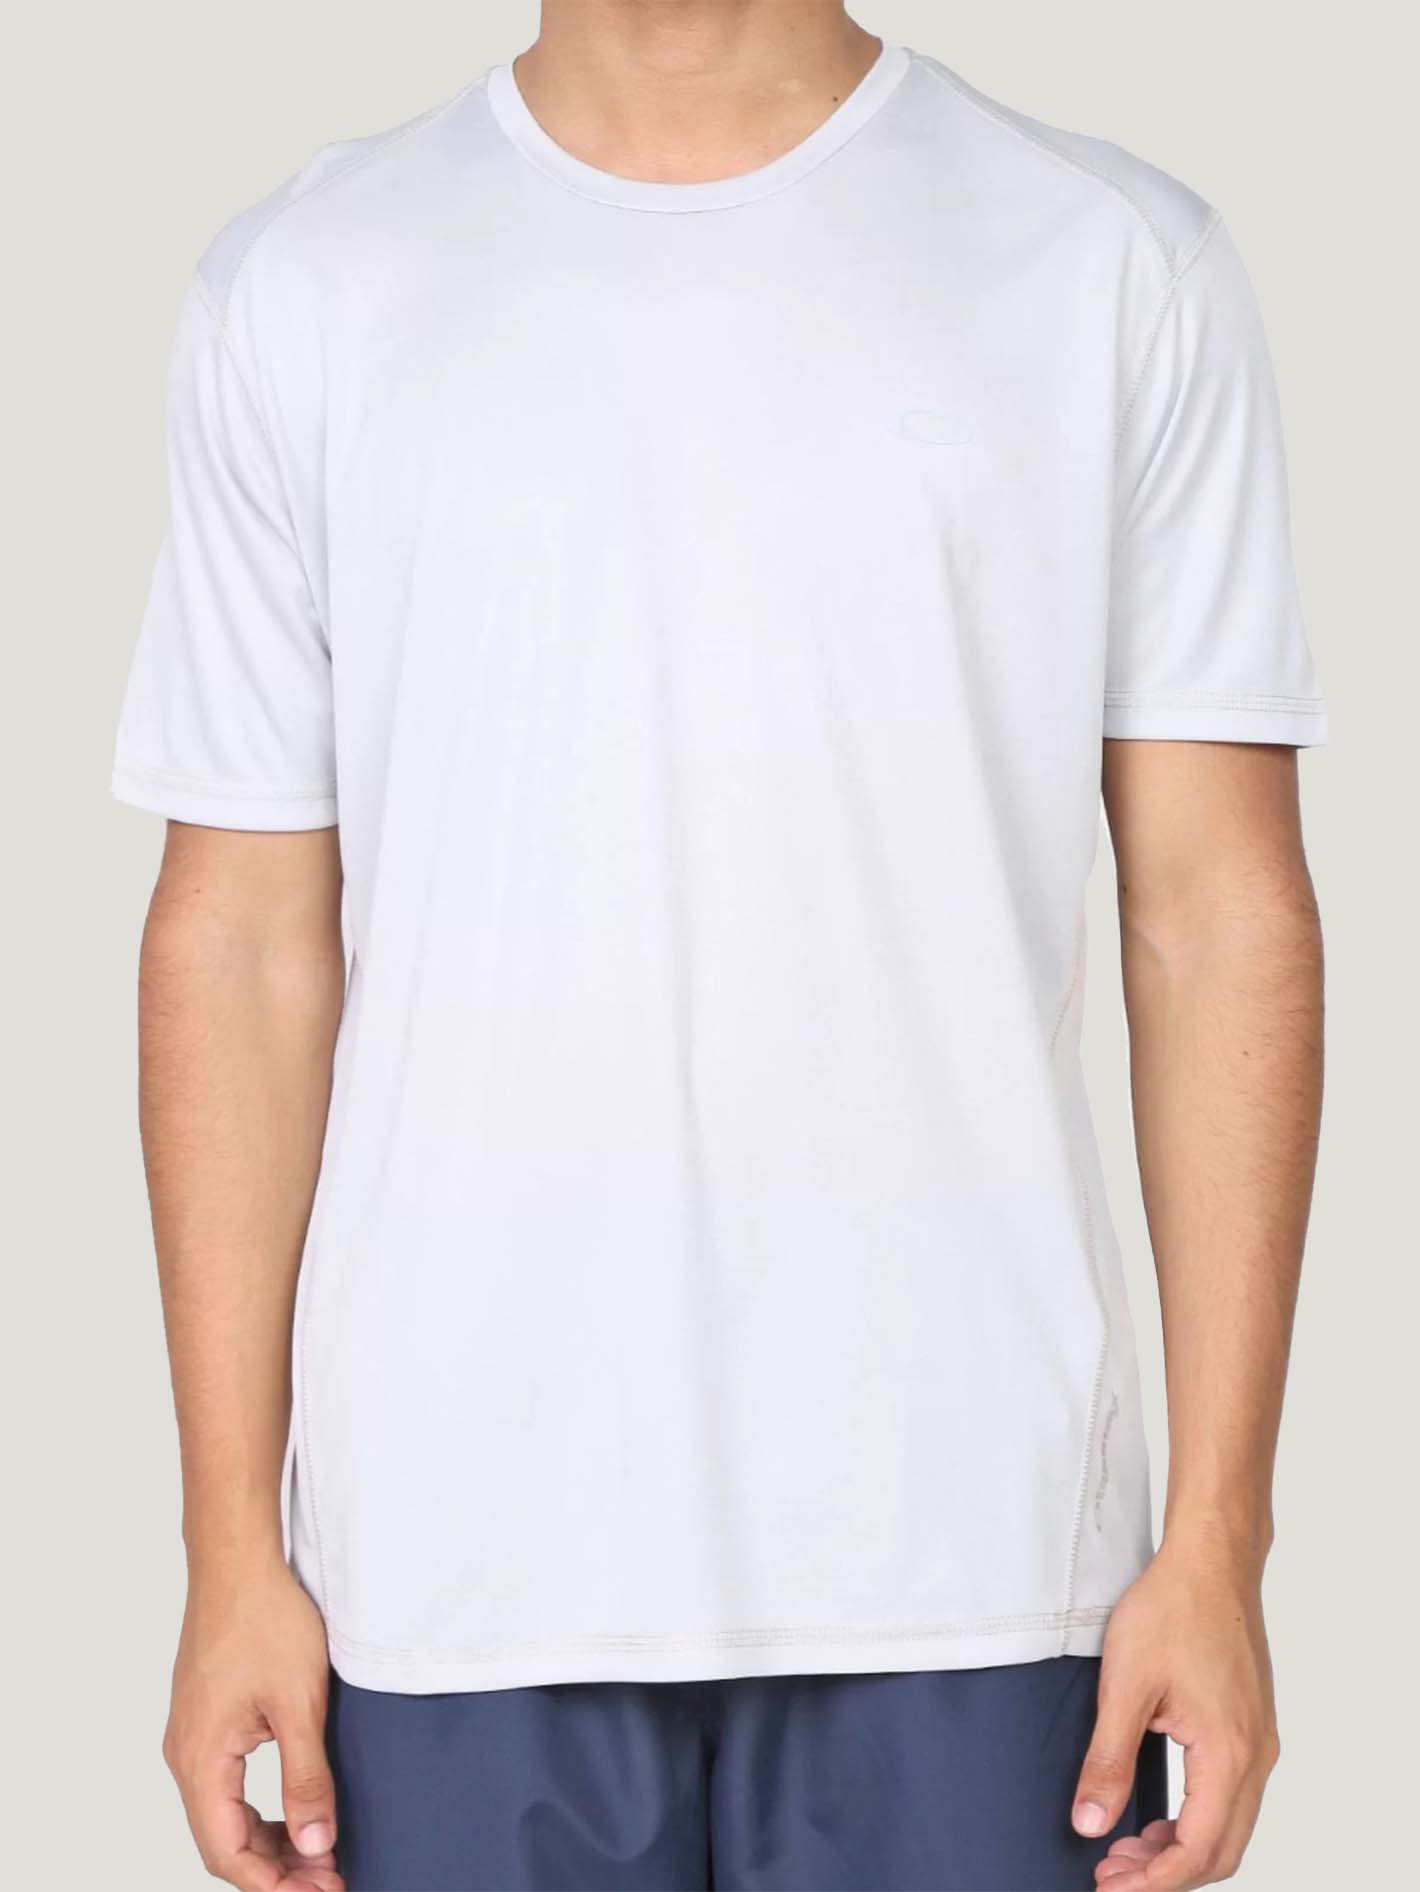 Camiseta Oakley Daily Sport 2.0 Masculina - 457426br-02e